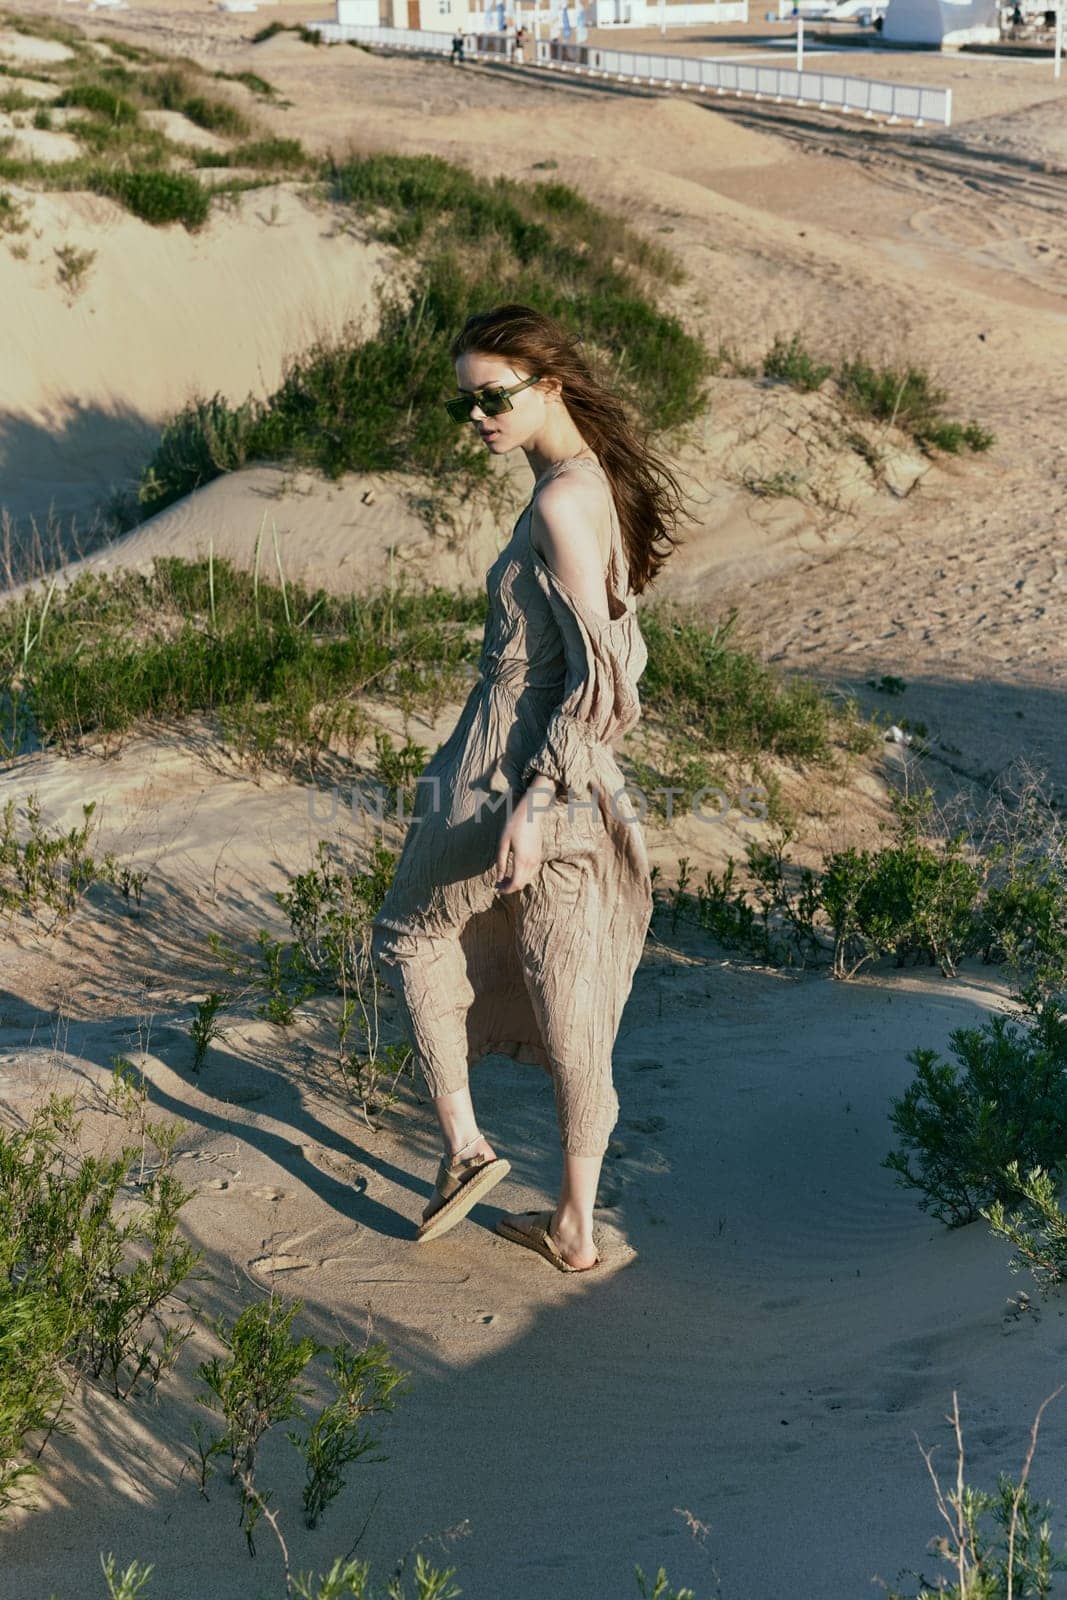 a slender woman in a long dress walks along a wild beach alone. High quality photo